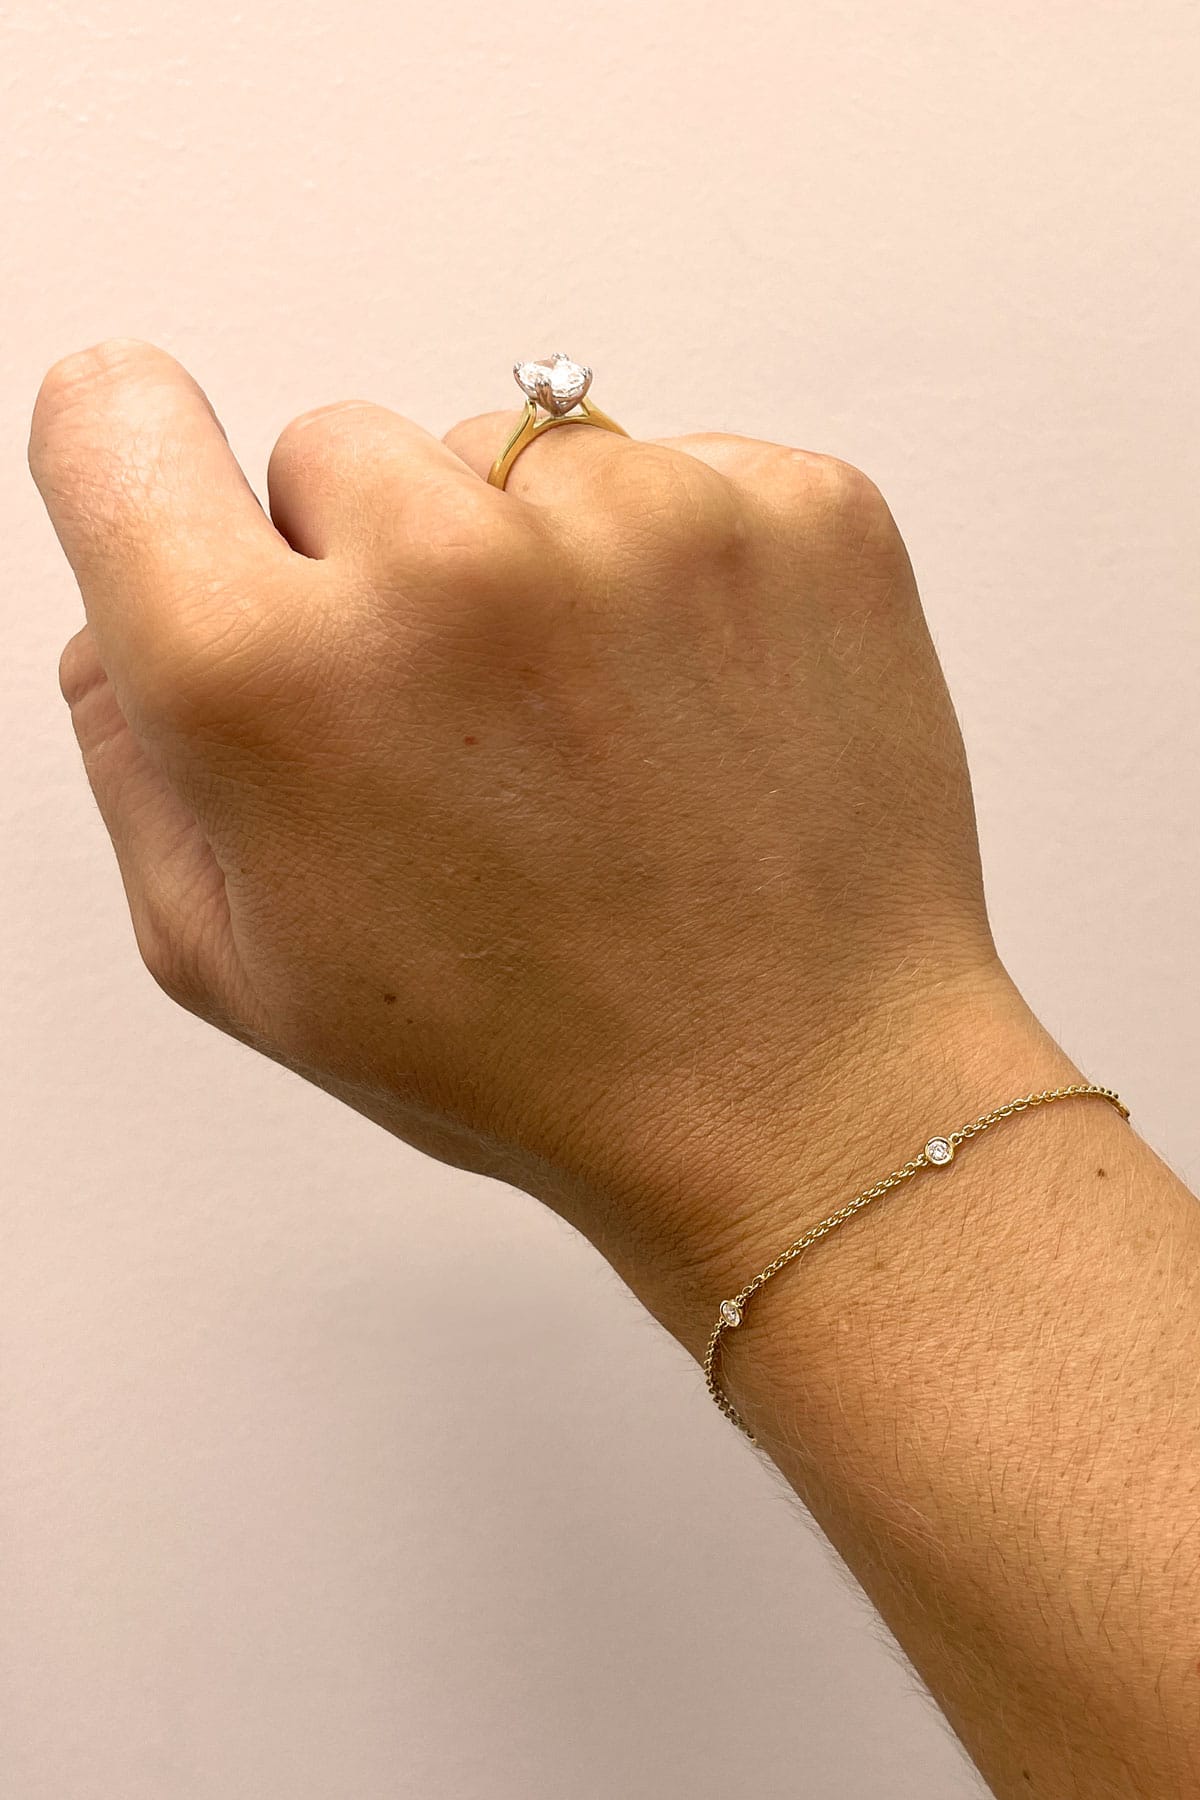 18 Carat Yellow Gold Diamond Set Bracelet available at LeGassick Diamonds and Jewellery Gold Coast, Australia.